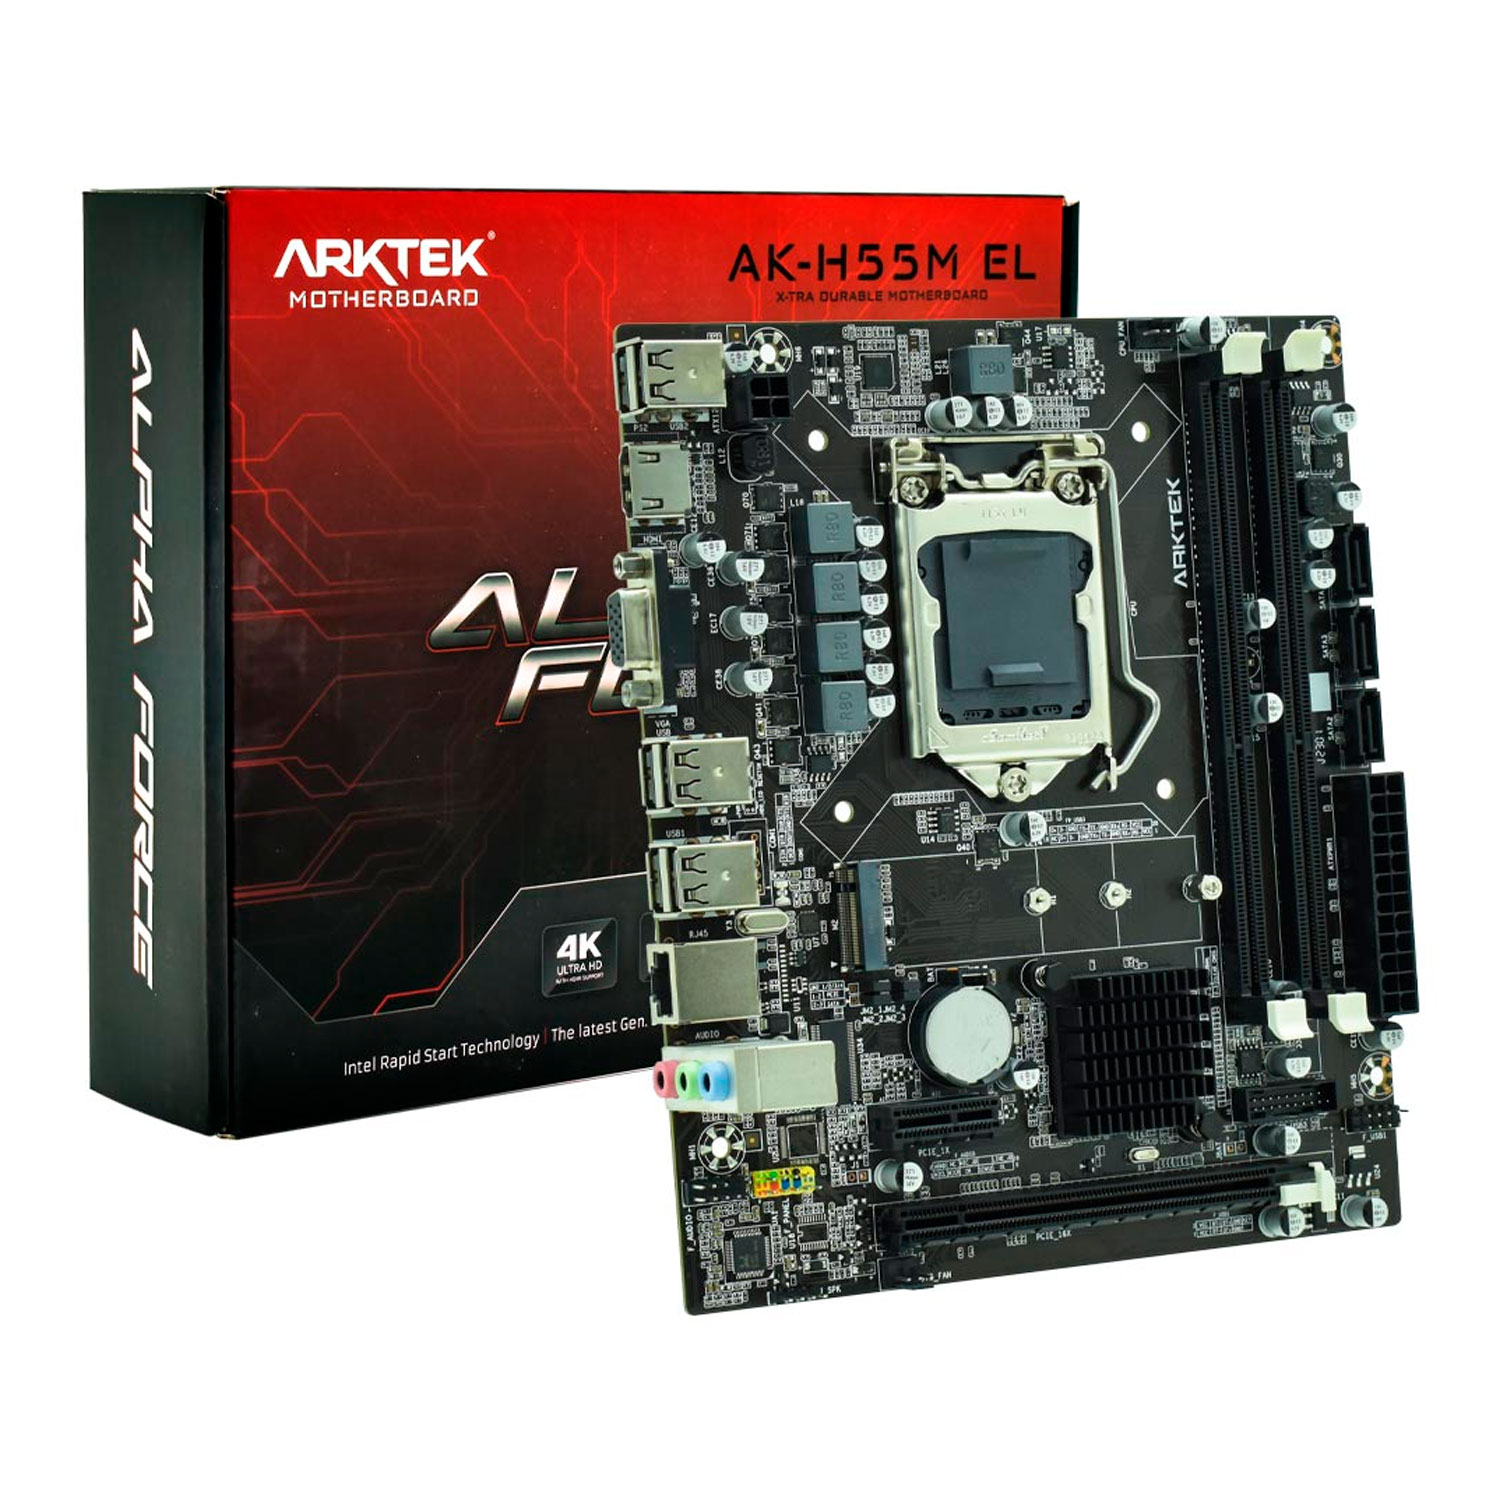 Placa Mãe Arktek AK-H55M EL DDR3 Socket LGA 1156 Chipset Intel H55 Micro ATX (Caixa Danificada)